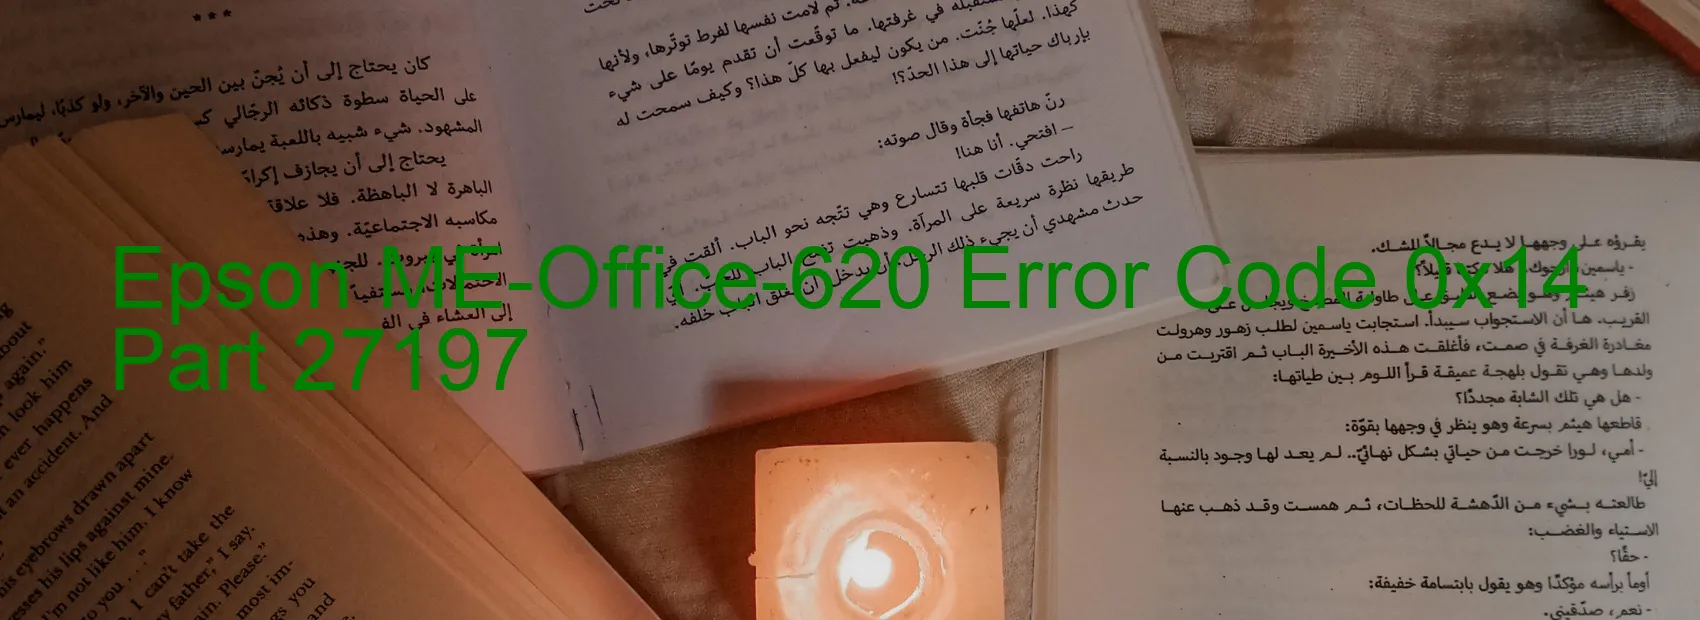 Epson ME-Office-620 Error Code 0x14 Part 27197